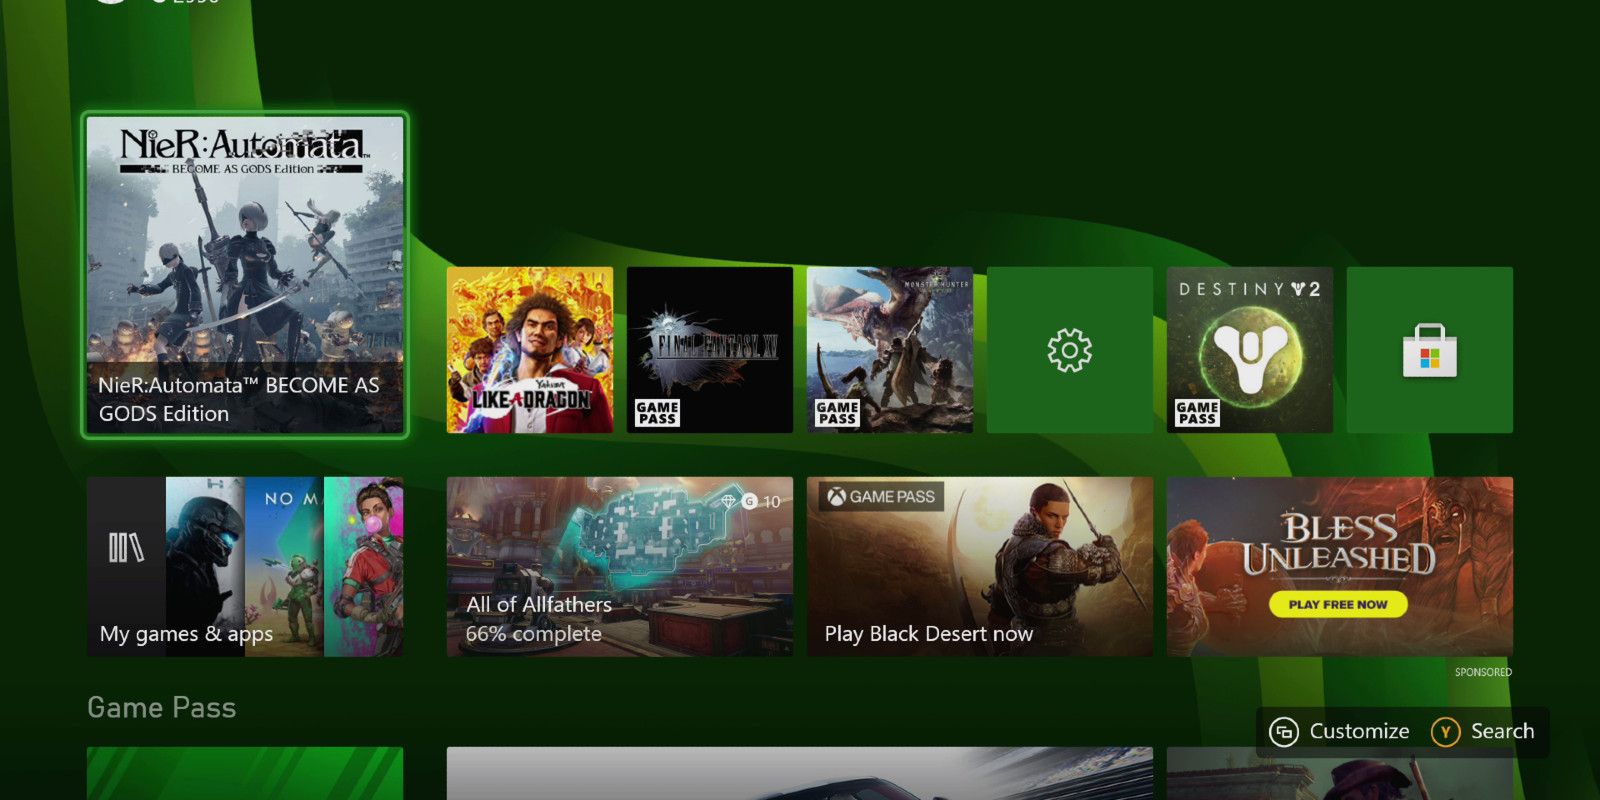 Microsoft Reveals New UI For Xbox Series X & S